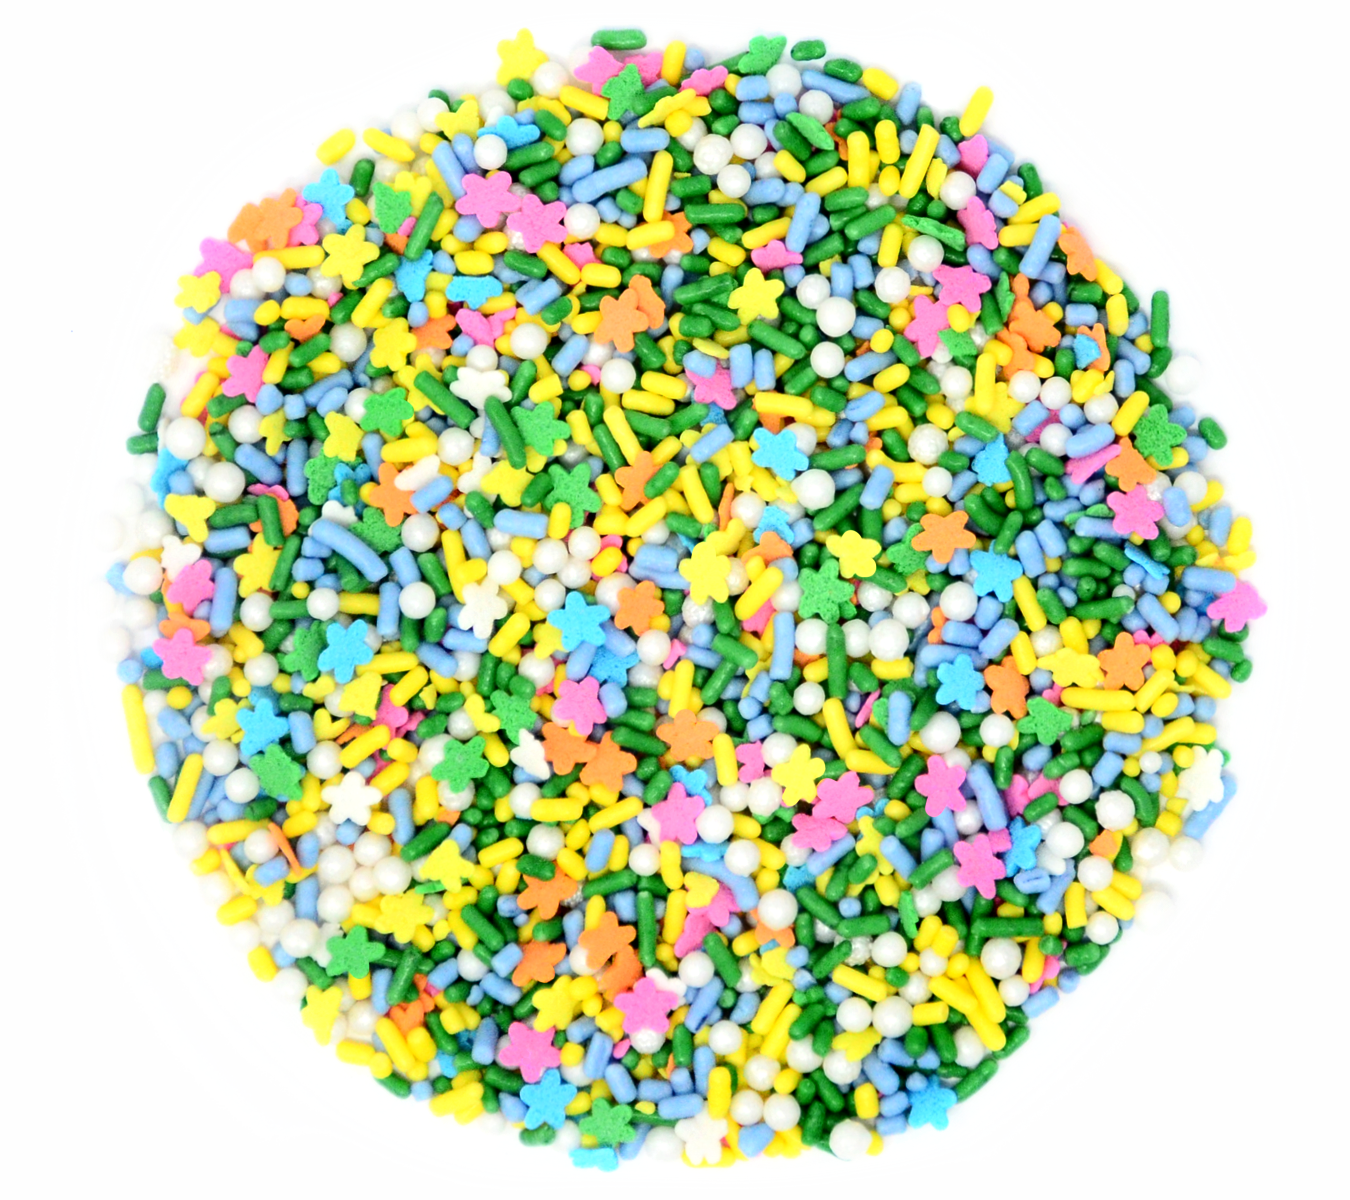 Mystic Sprinkles Flower Power Sprinkle Mix 3.5 oz Bottle, Size: 1.75 x 1.75 x 4.25, Blue